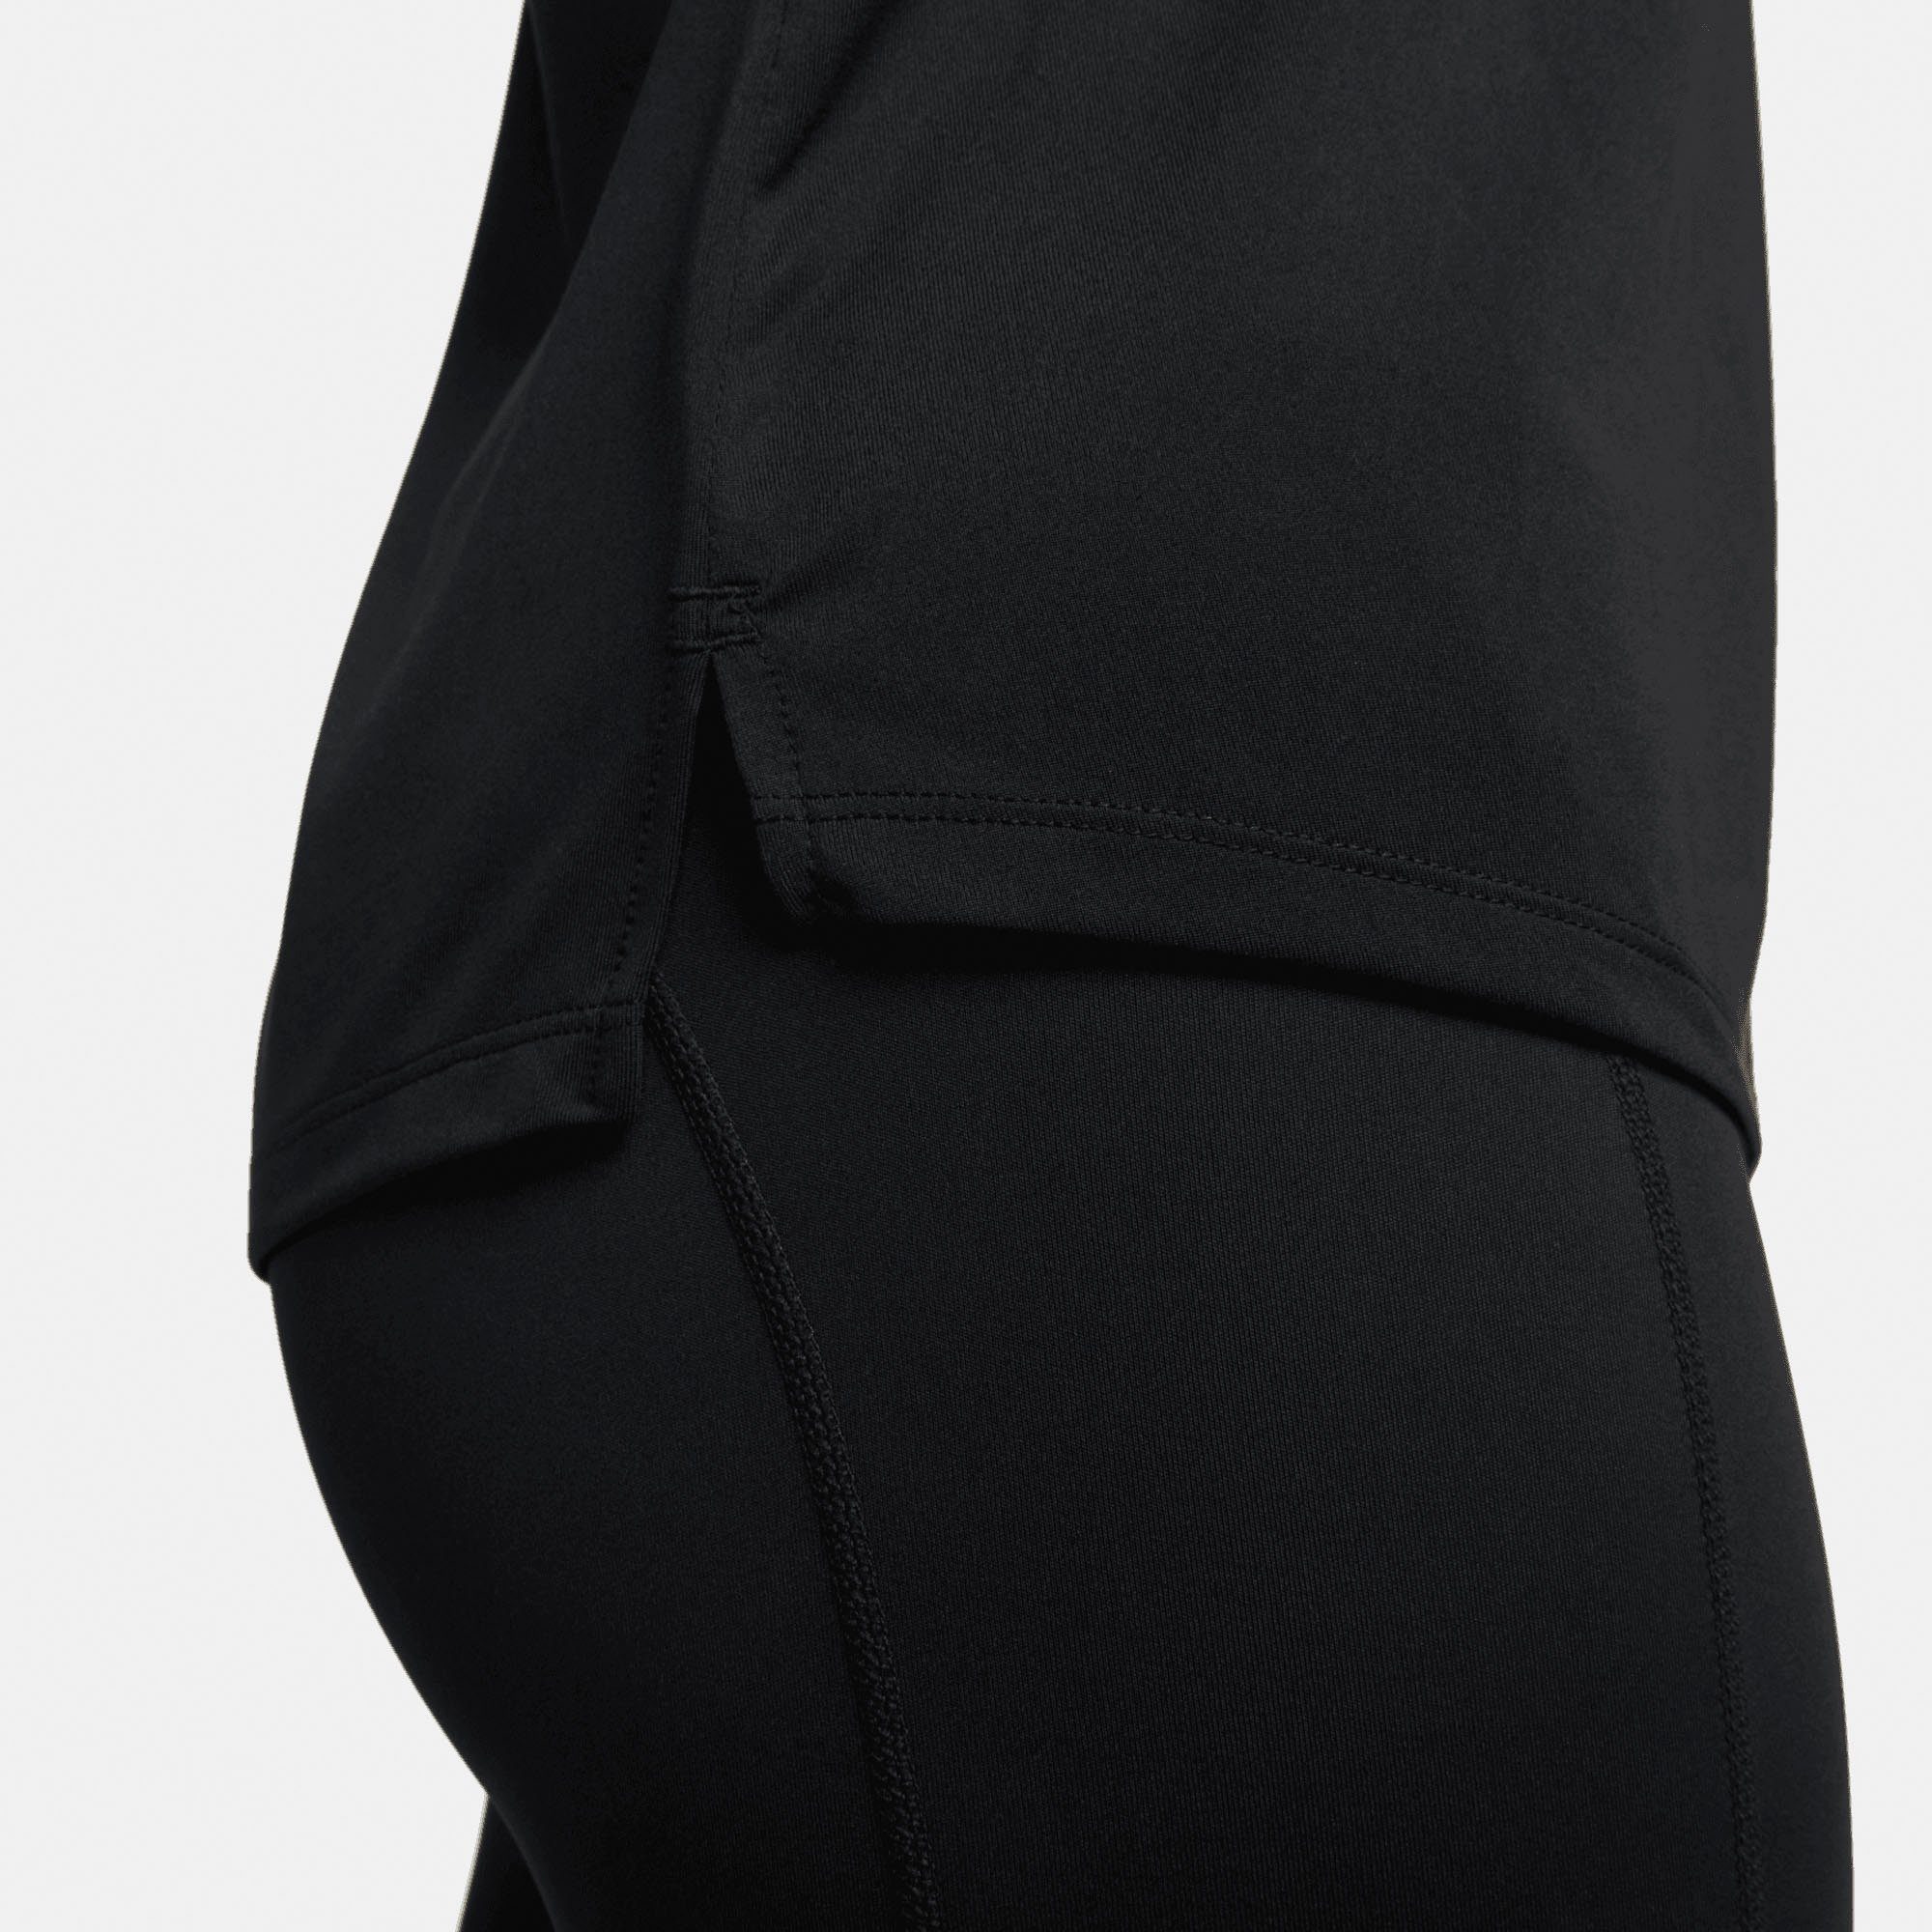 Top Nike Dri-FIT Women's Short-Sleeved BLACK Swoosh Laufshirt One